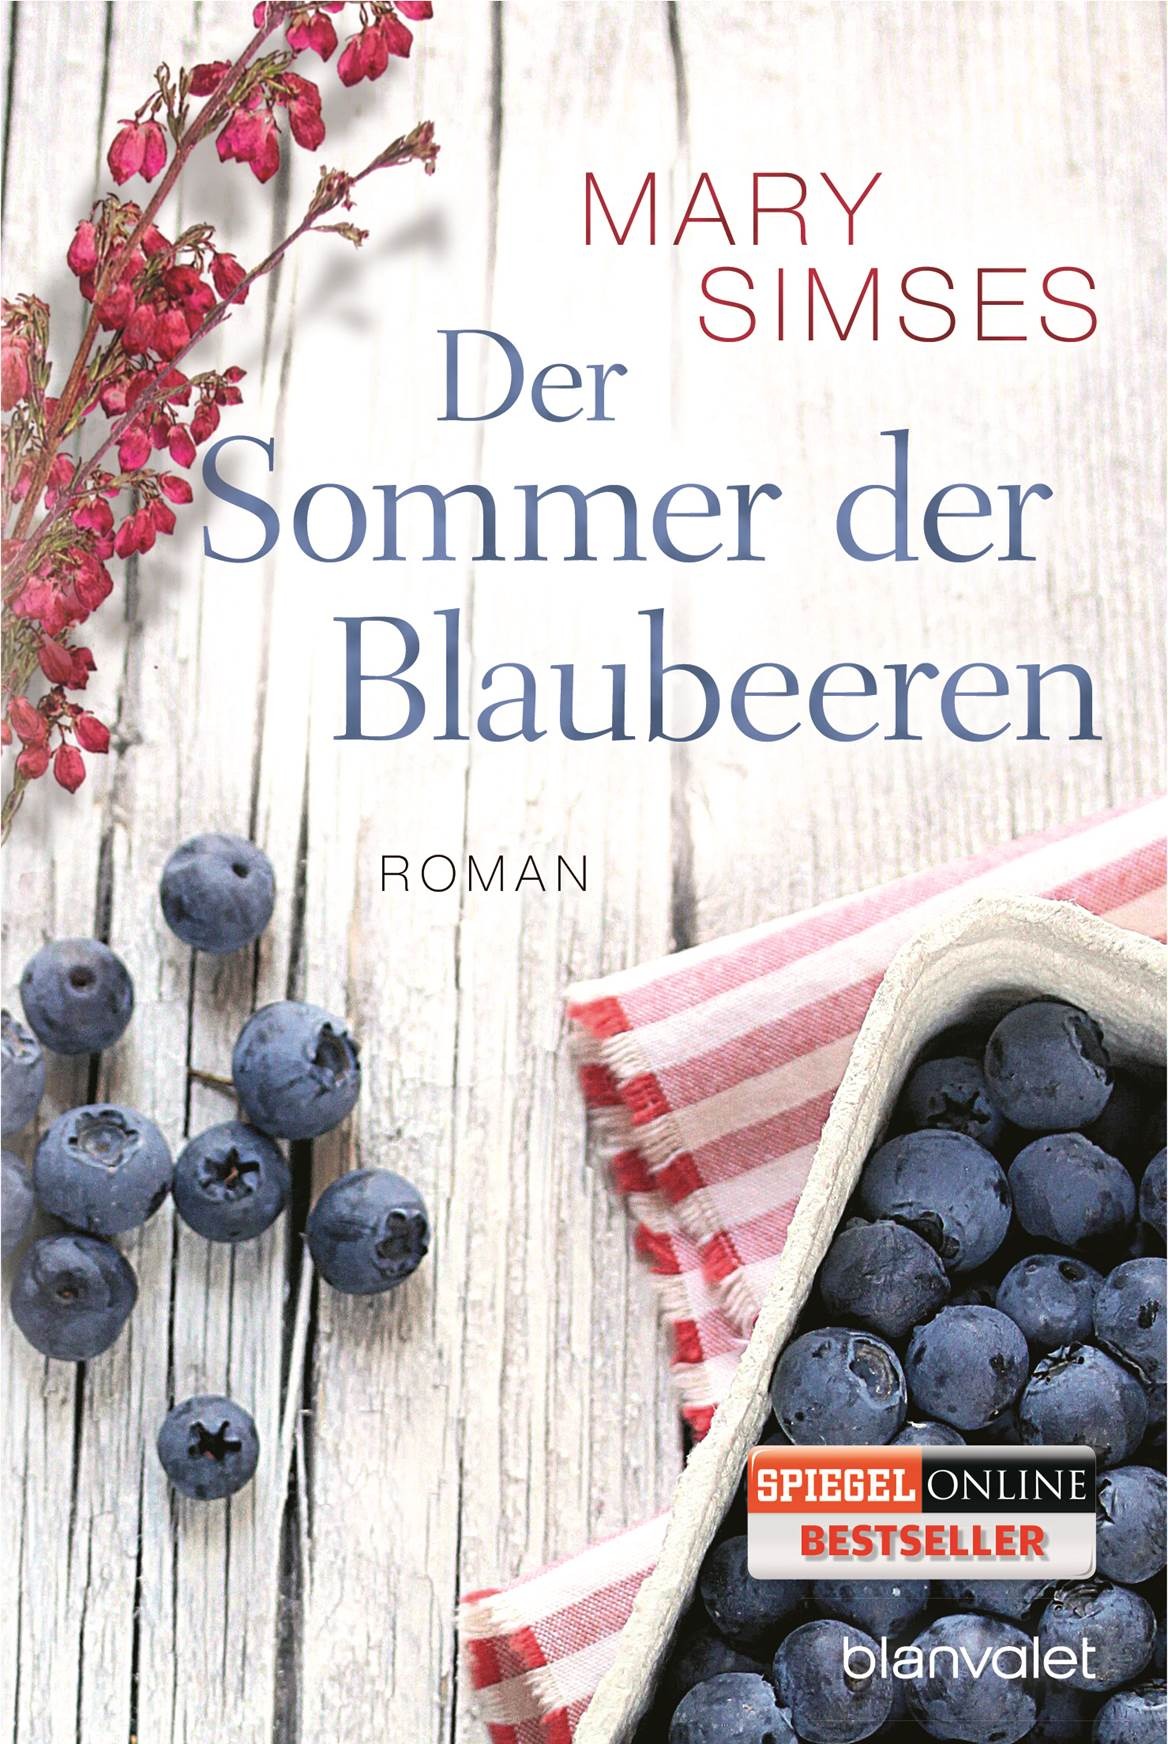 http://www.randomhouse.de/content/edition/covervoila_hires/Simses_MDer_Sommer_der_Blaubeeren_149676.jpg